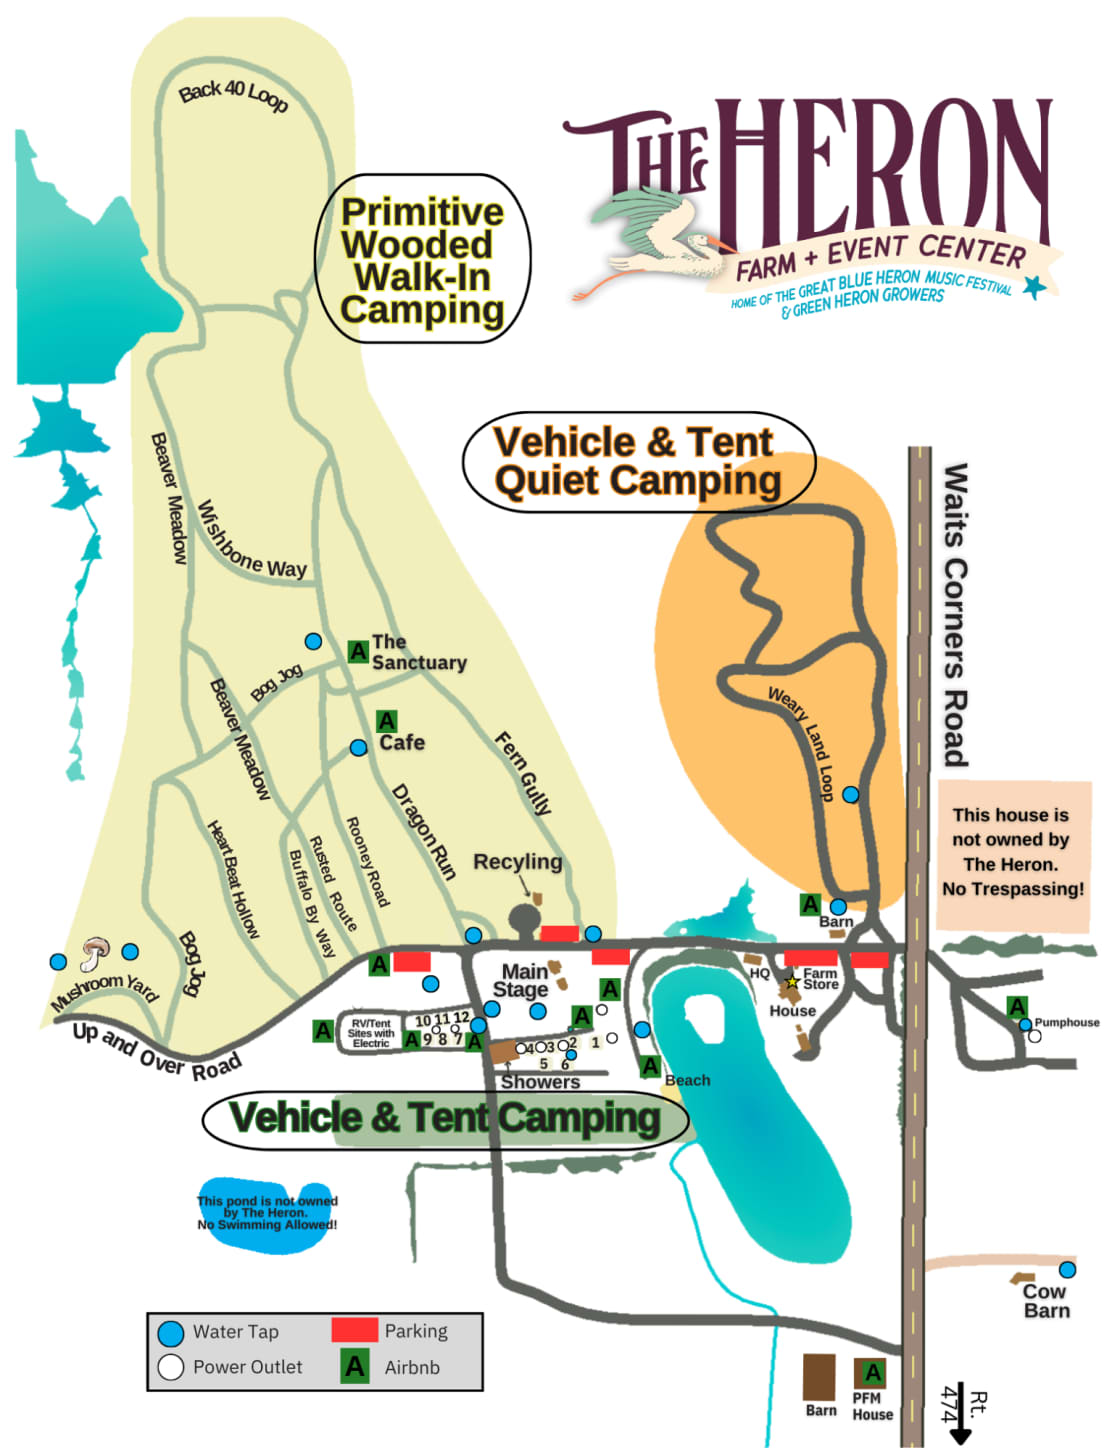 The Heron Farm & Event Center